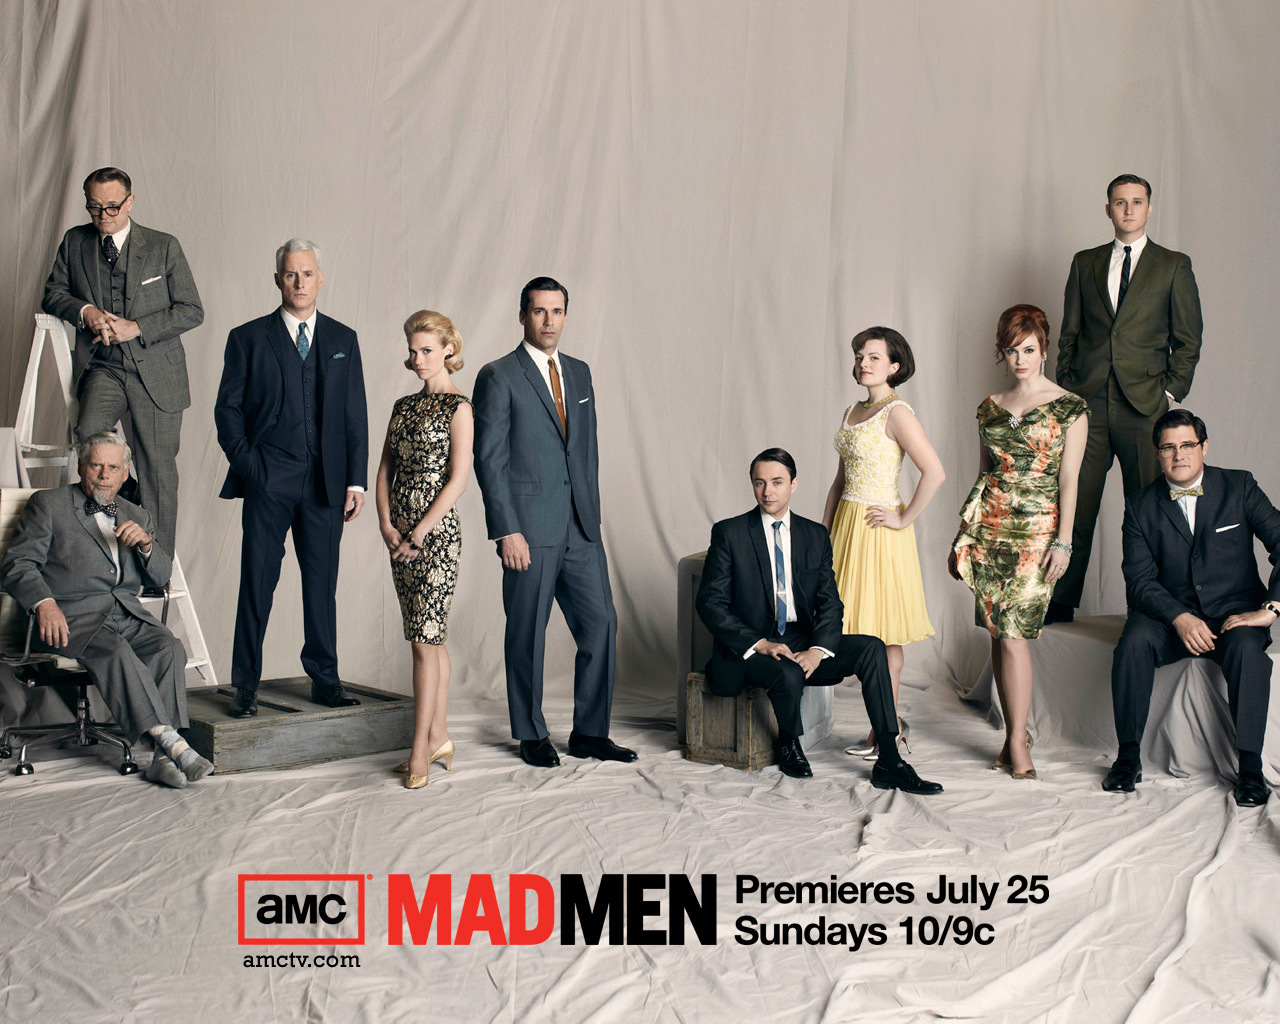 Mad Men, AMC, Jon Hamm, Don Draper